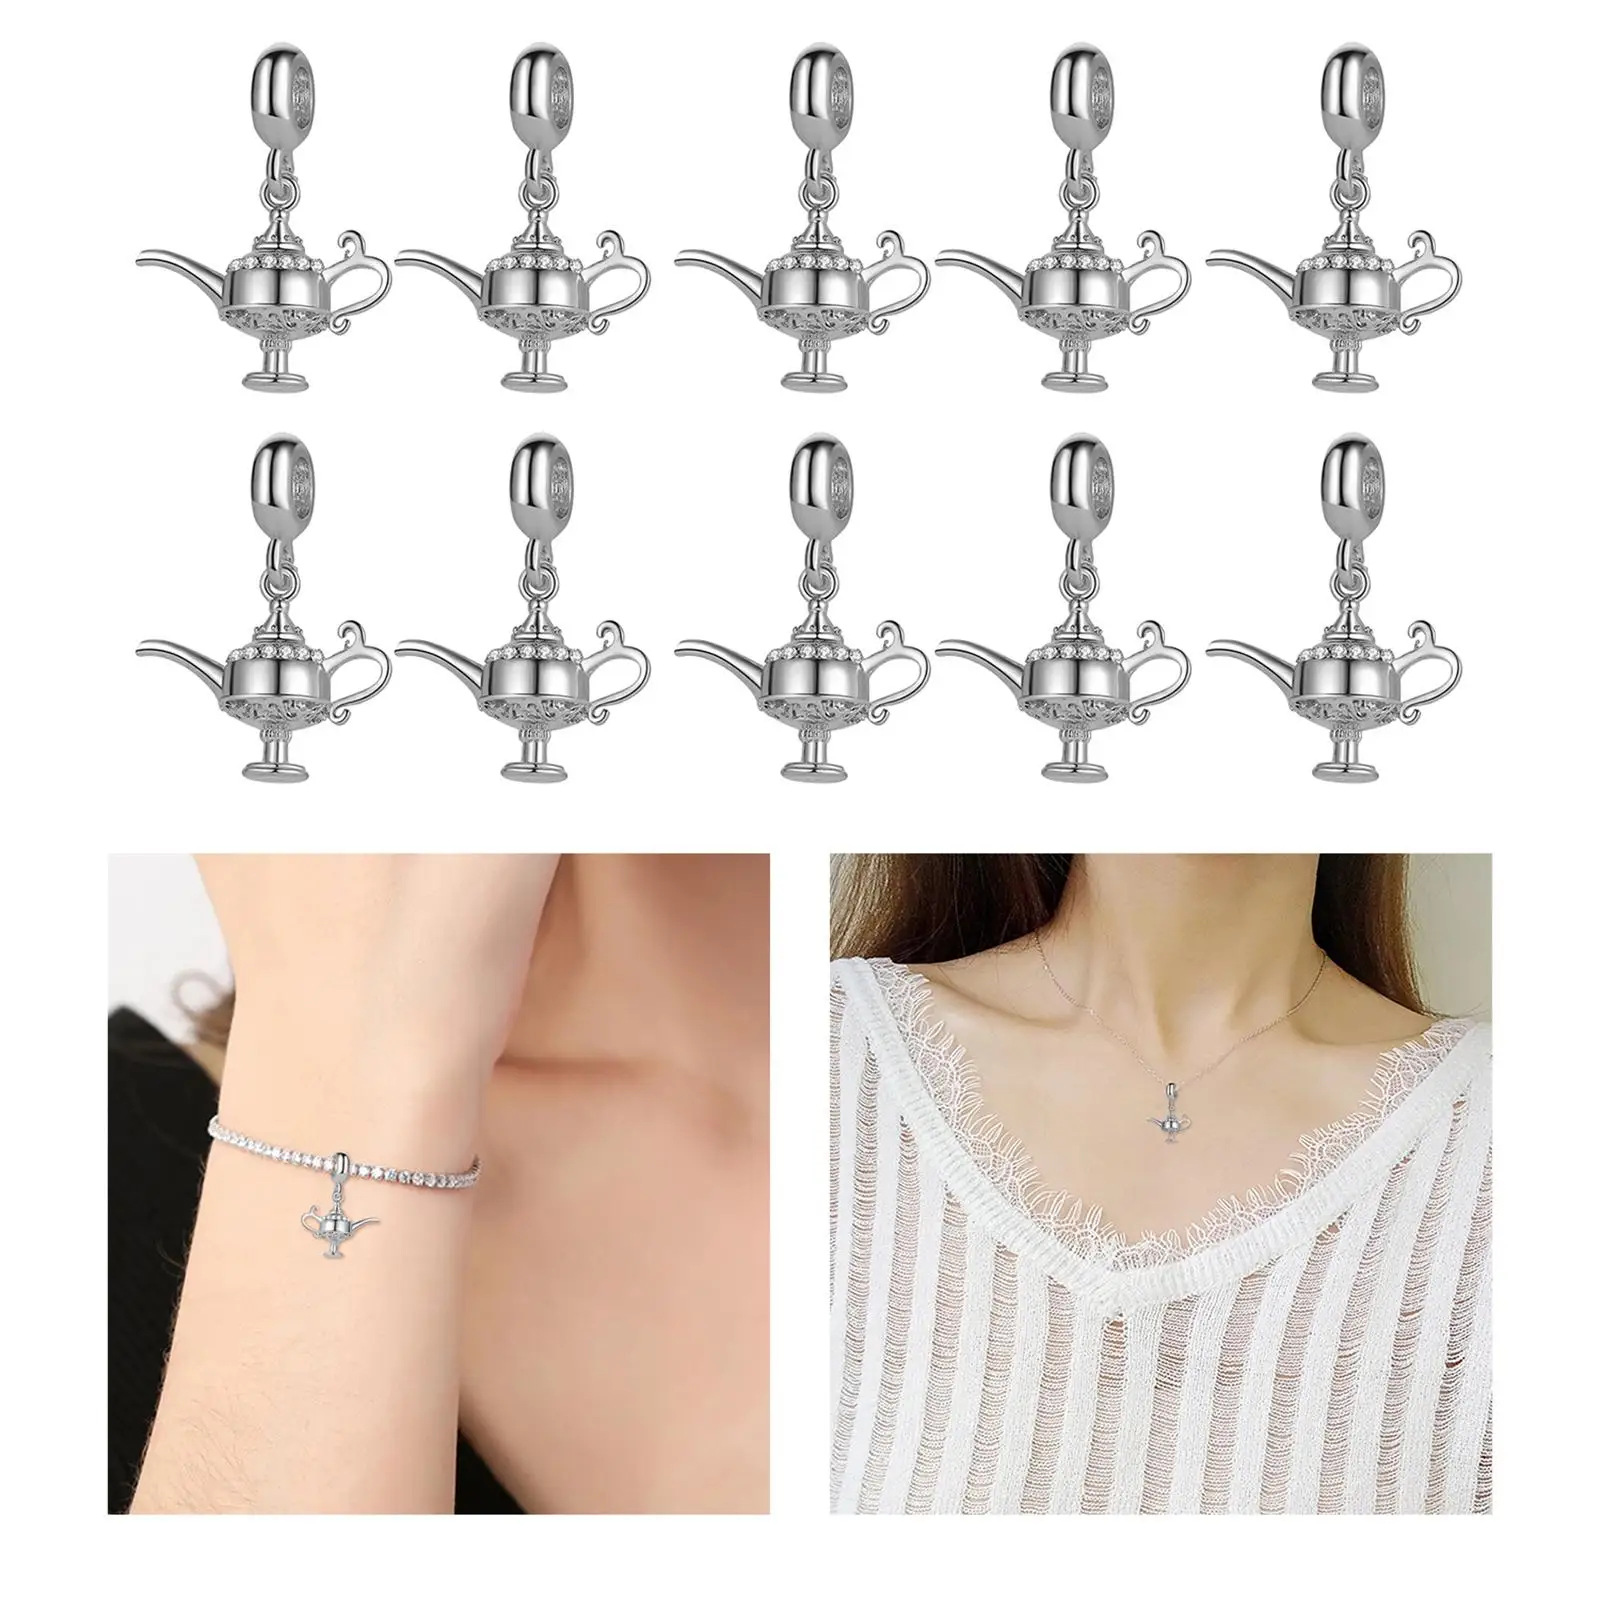 DIY Pendant Bracelet Necklaces Pendant Bangle Alloy Material Gifts Women